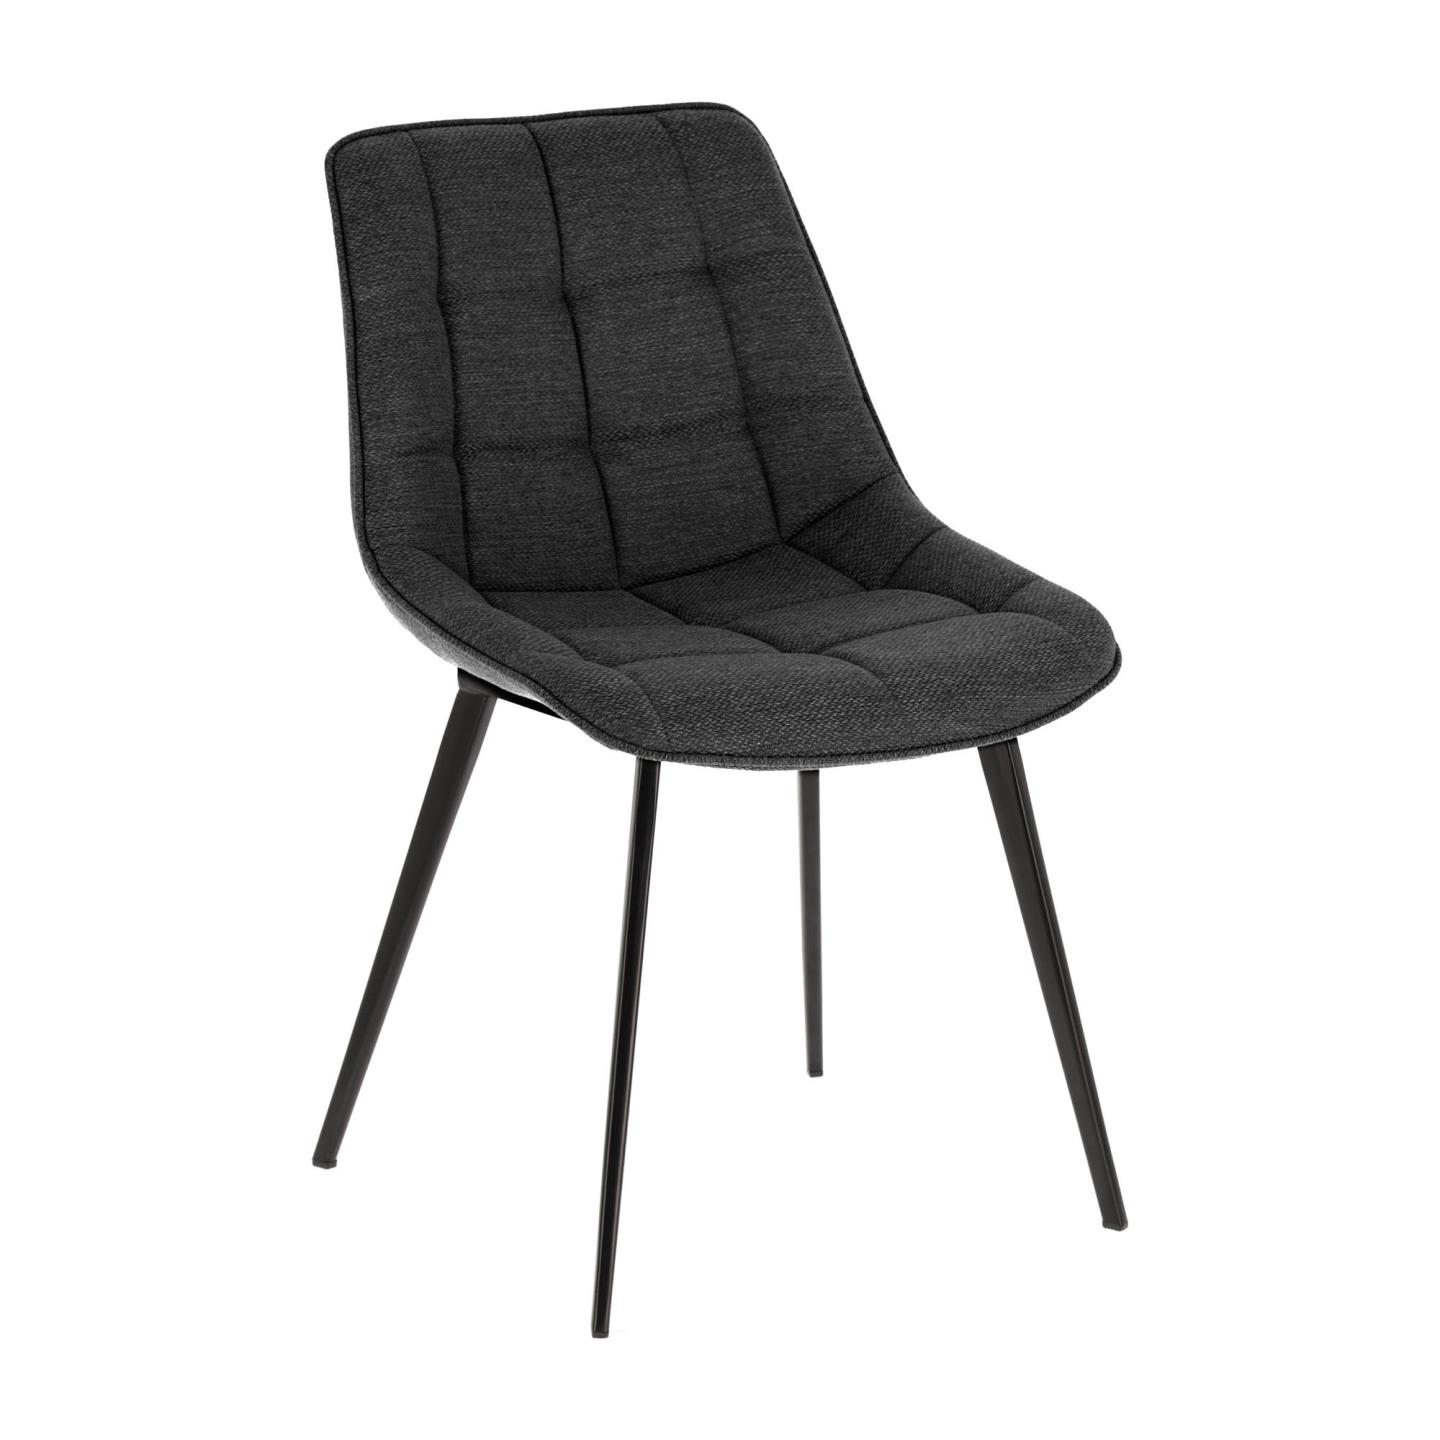 LAFORMA Adah spisebordsstol - mørkegrå stof og sort stål